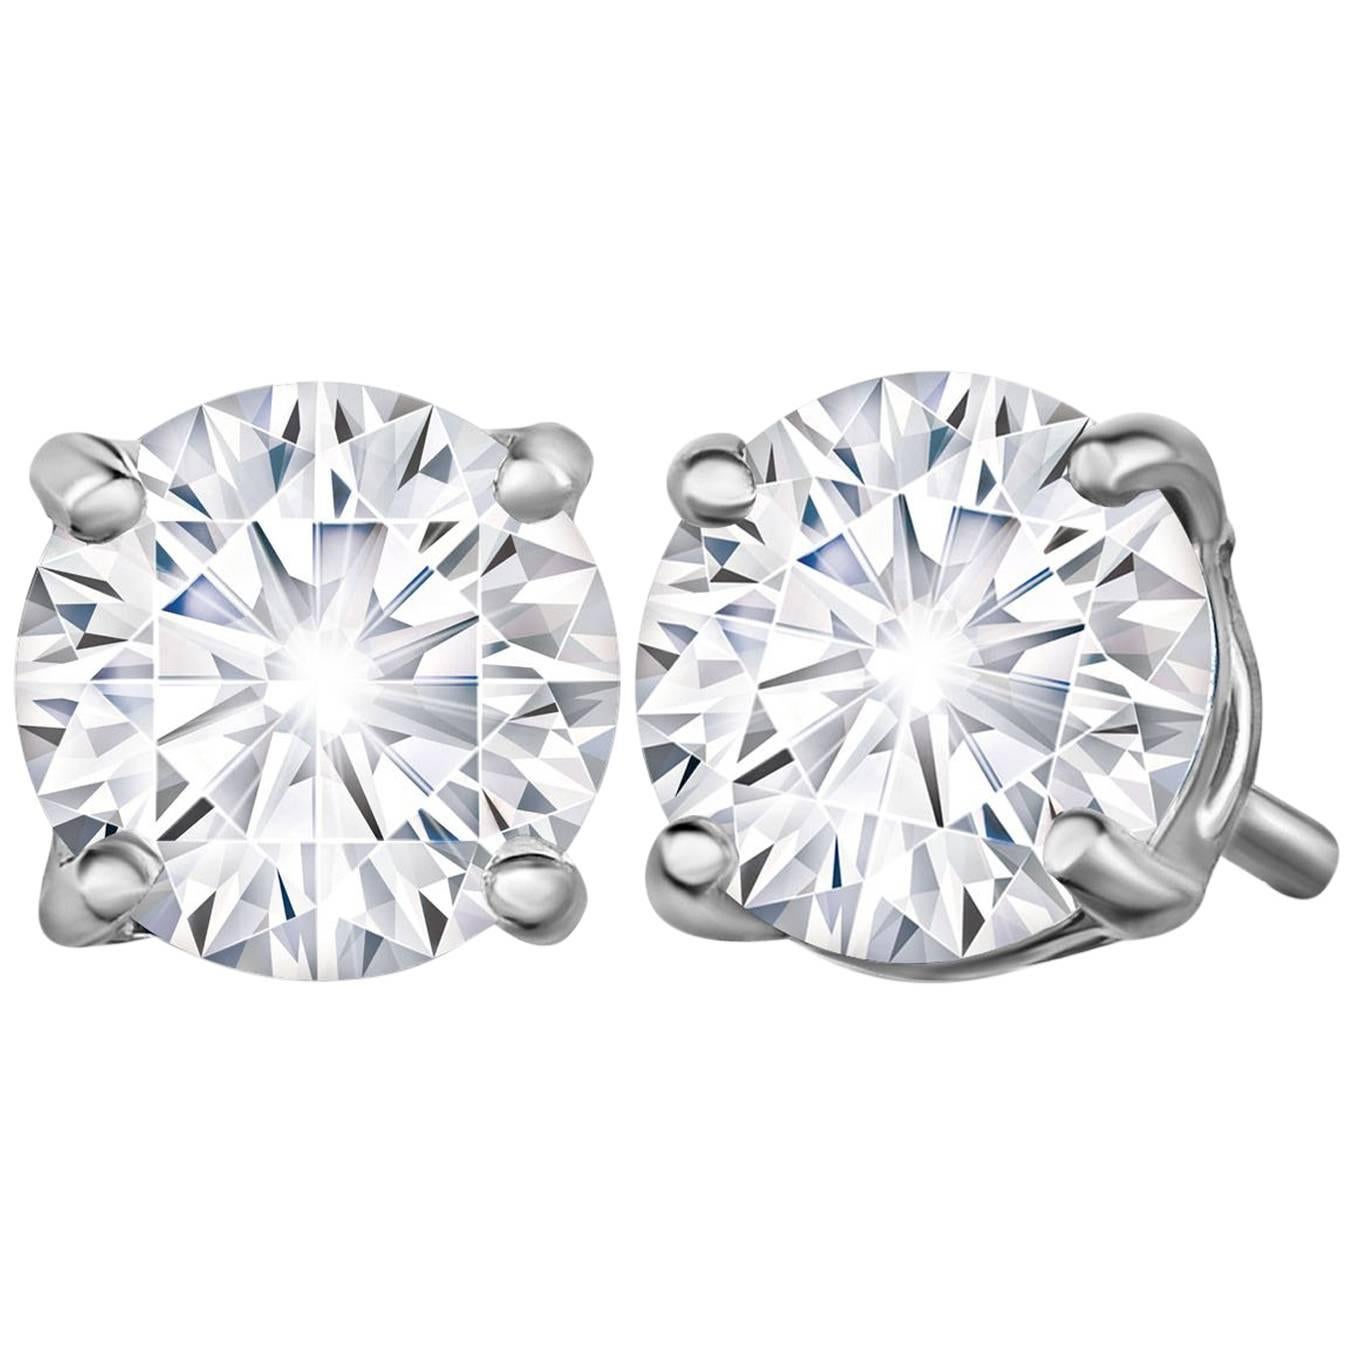 Marisa Perry 72 Point Forevermark Diamond Studs in Platinum